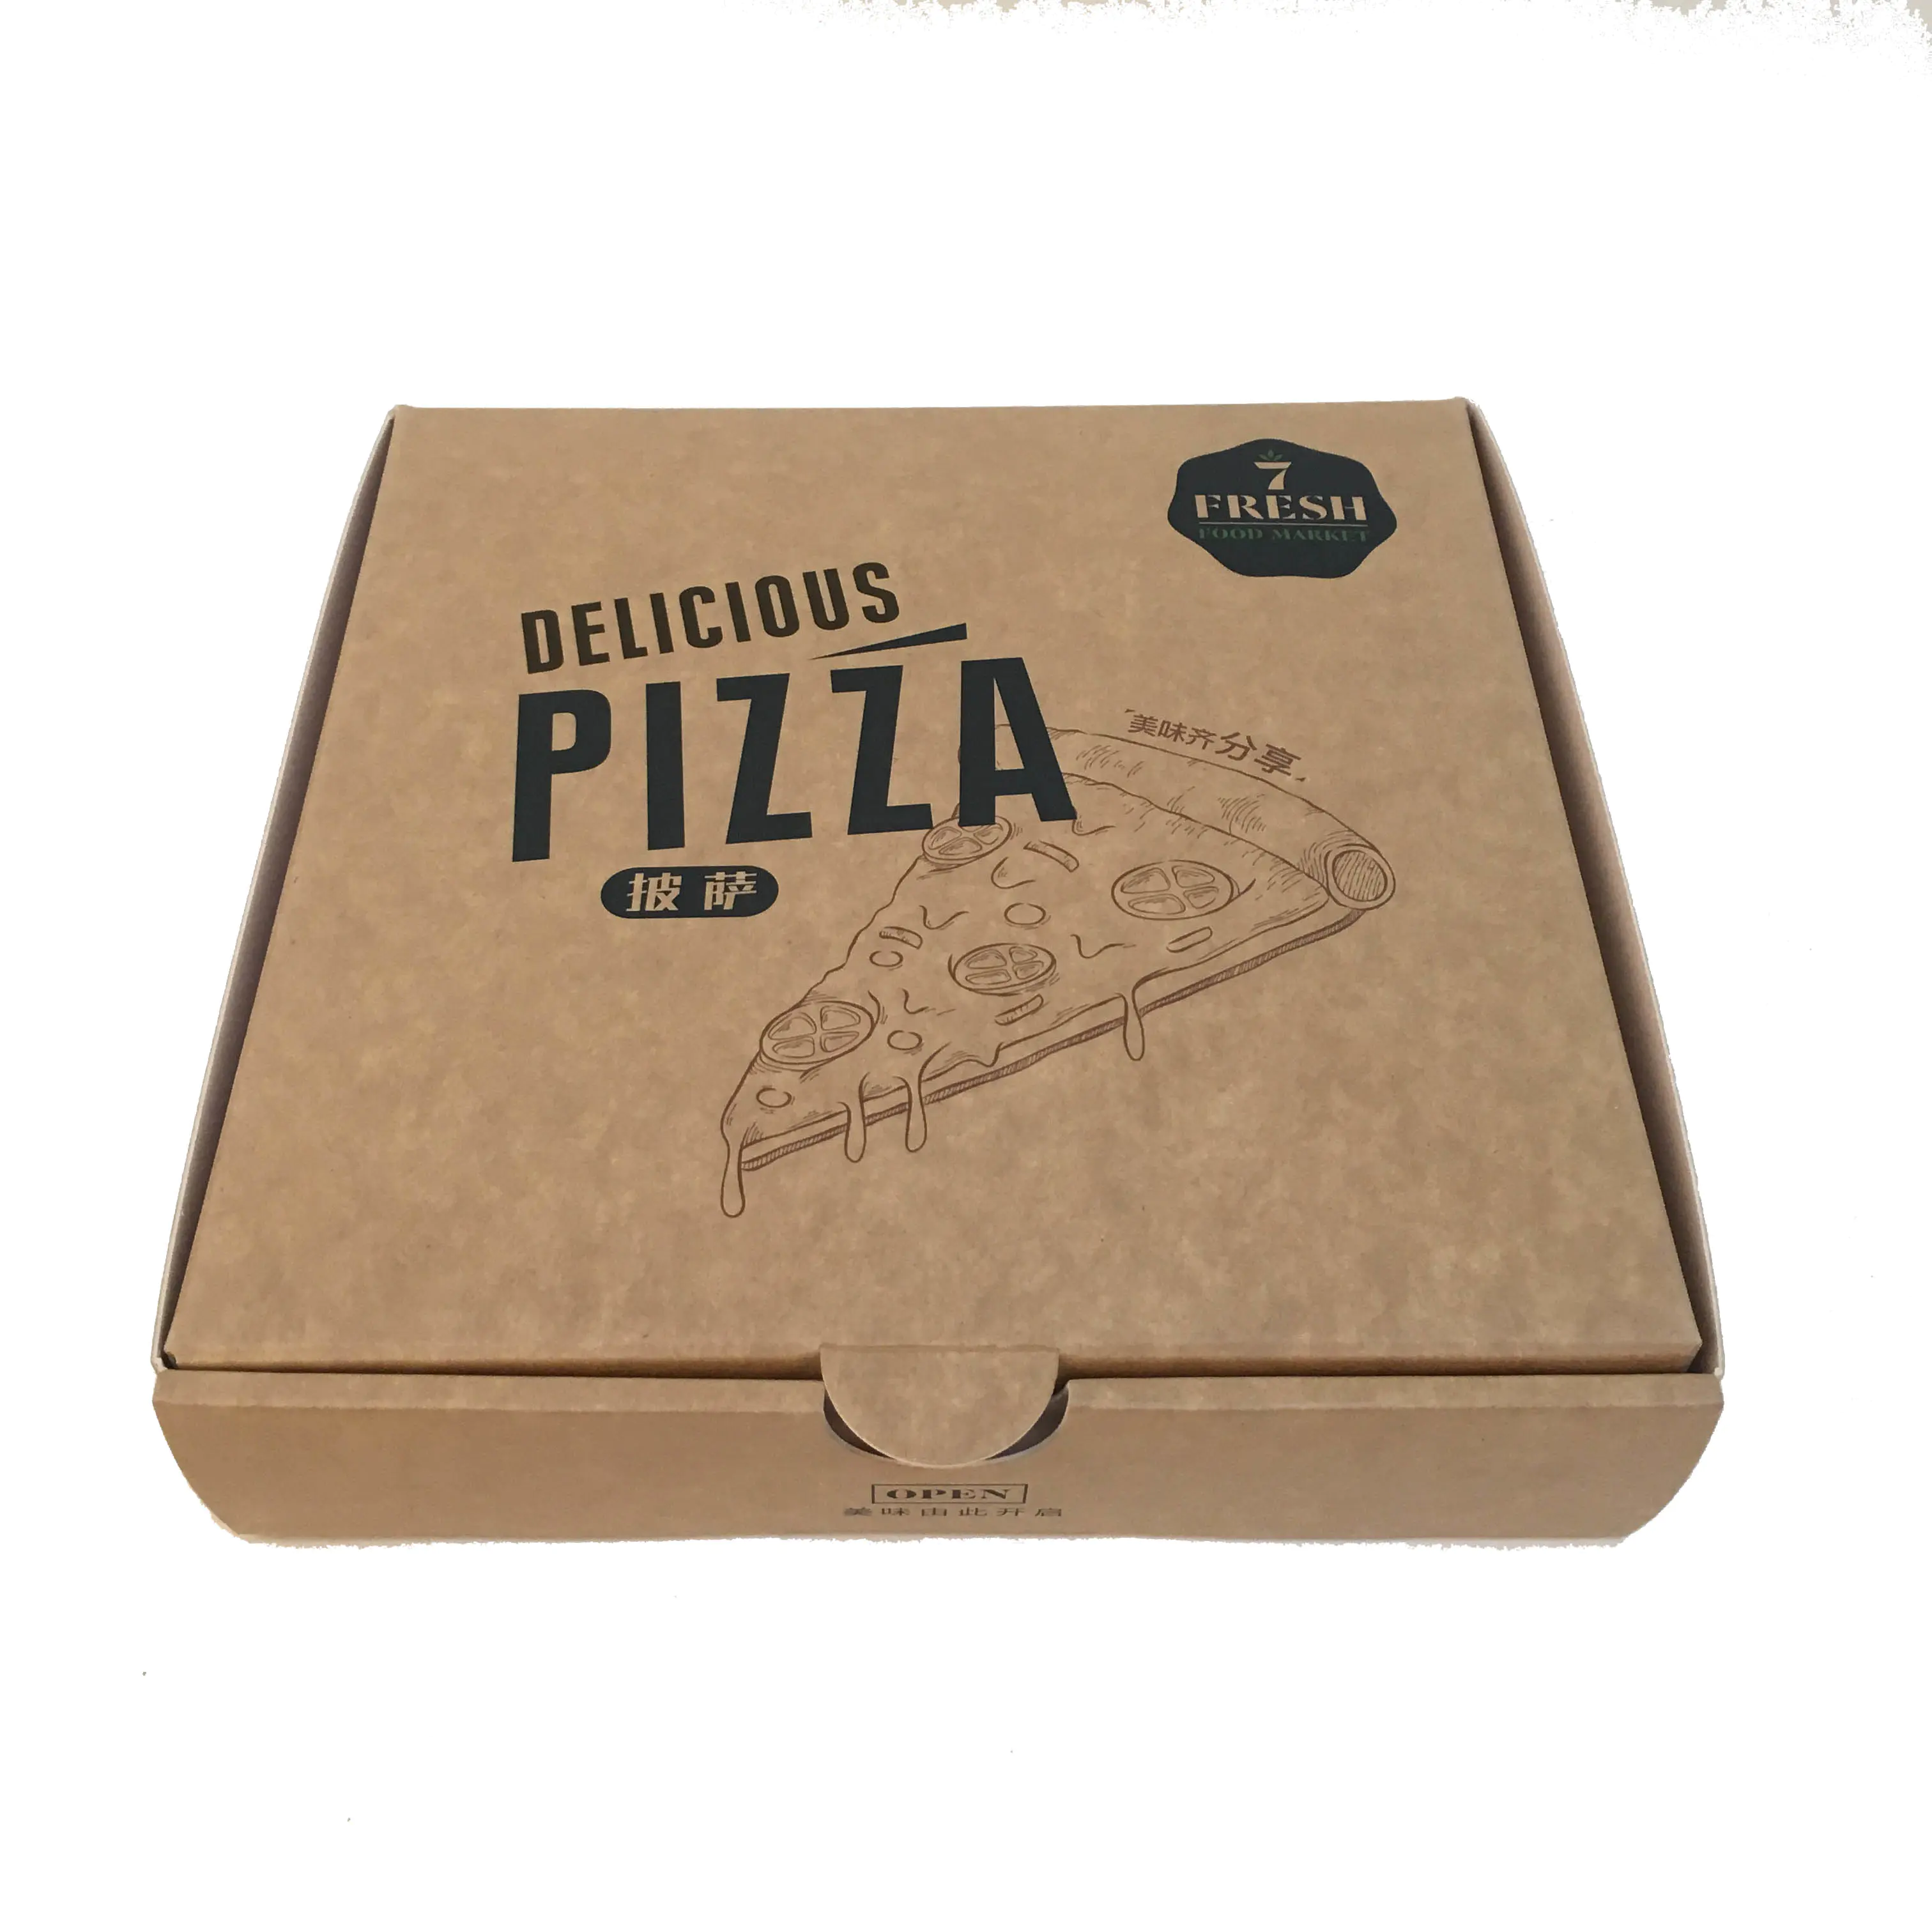 logo printing customize food grade cardboard inside lining corrugate pizza box 